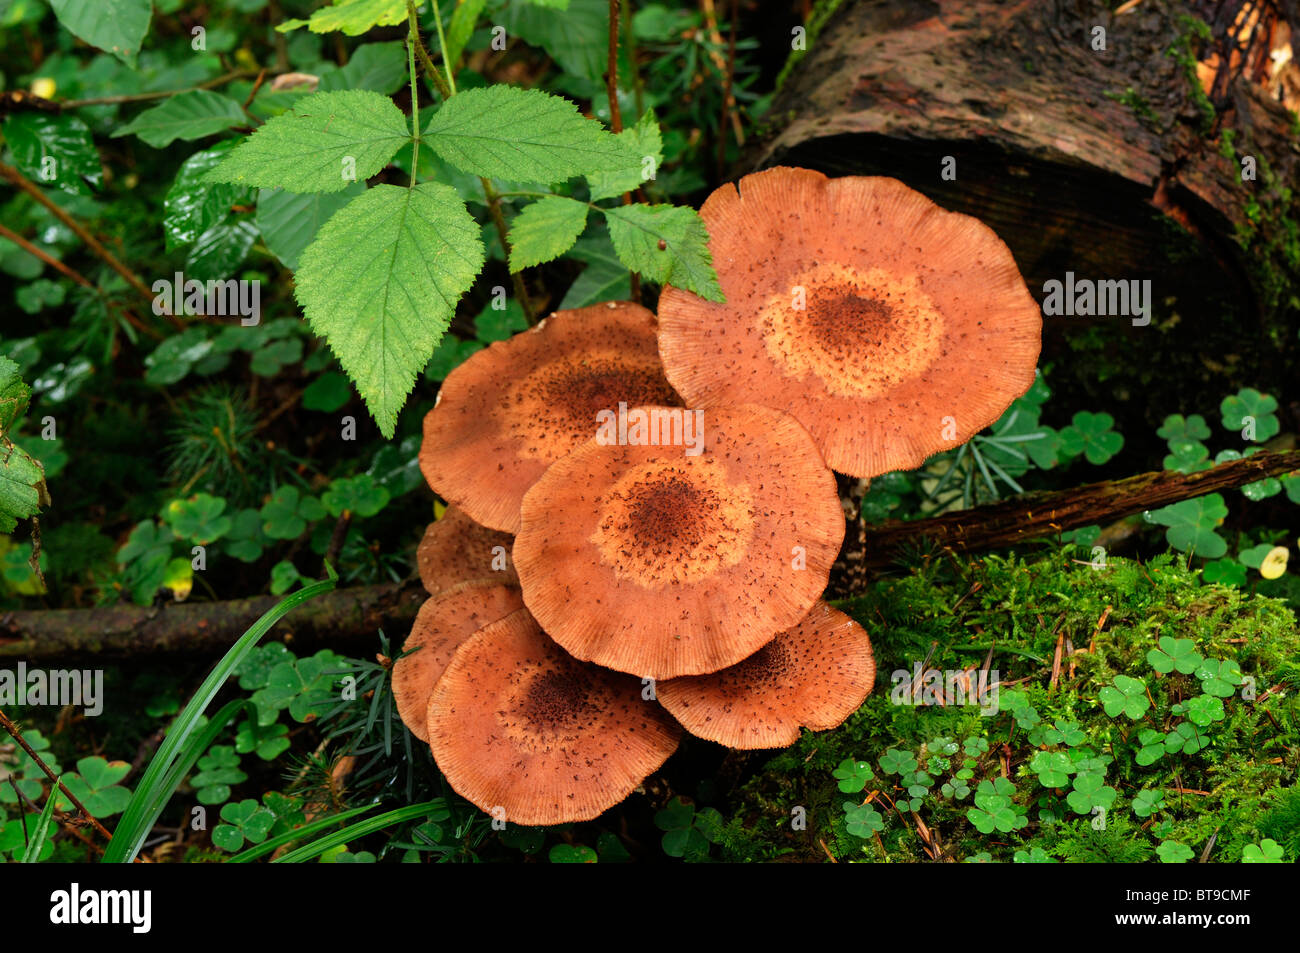 Mushrooms in the undergrowth Stock Photo